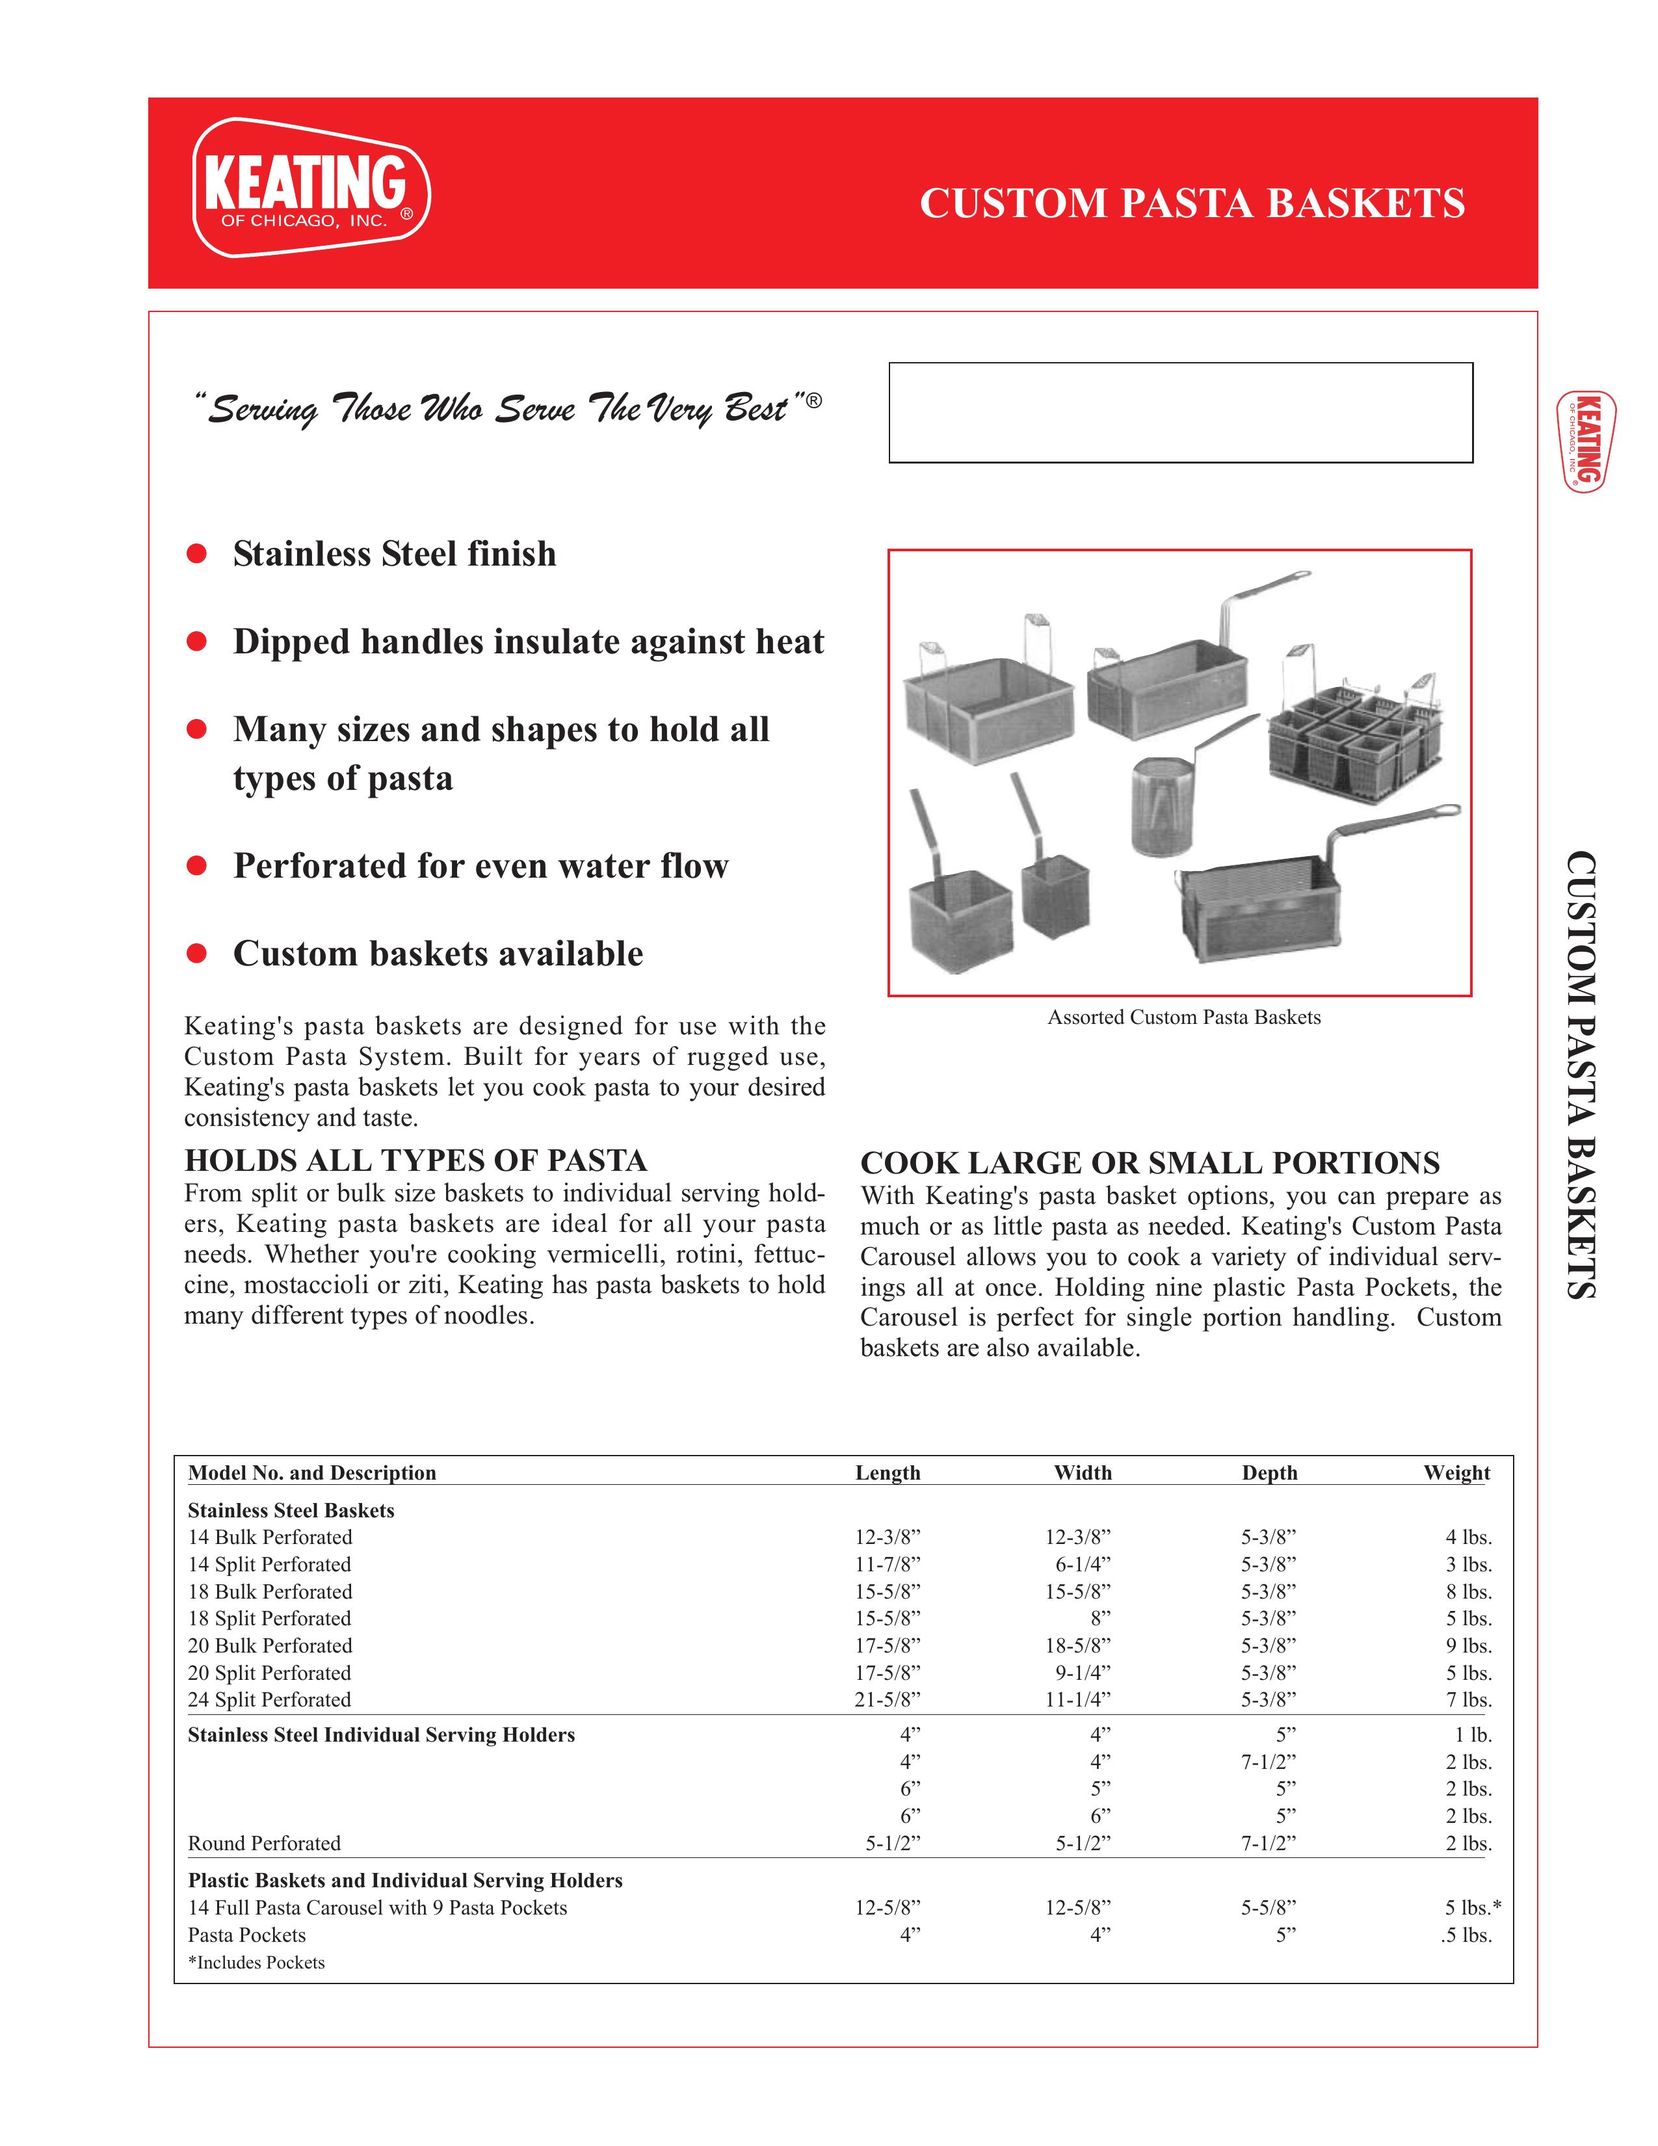 Keating Of Chicago Pasta Baskets Pasta Maker User Manual